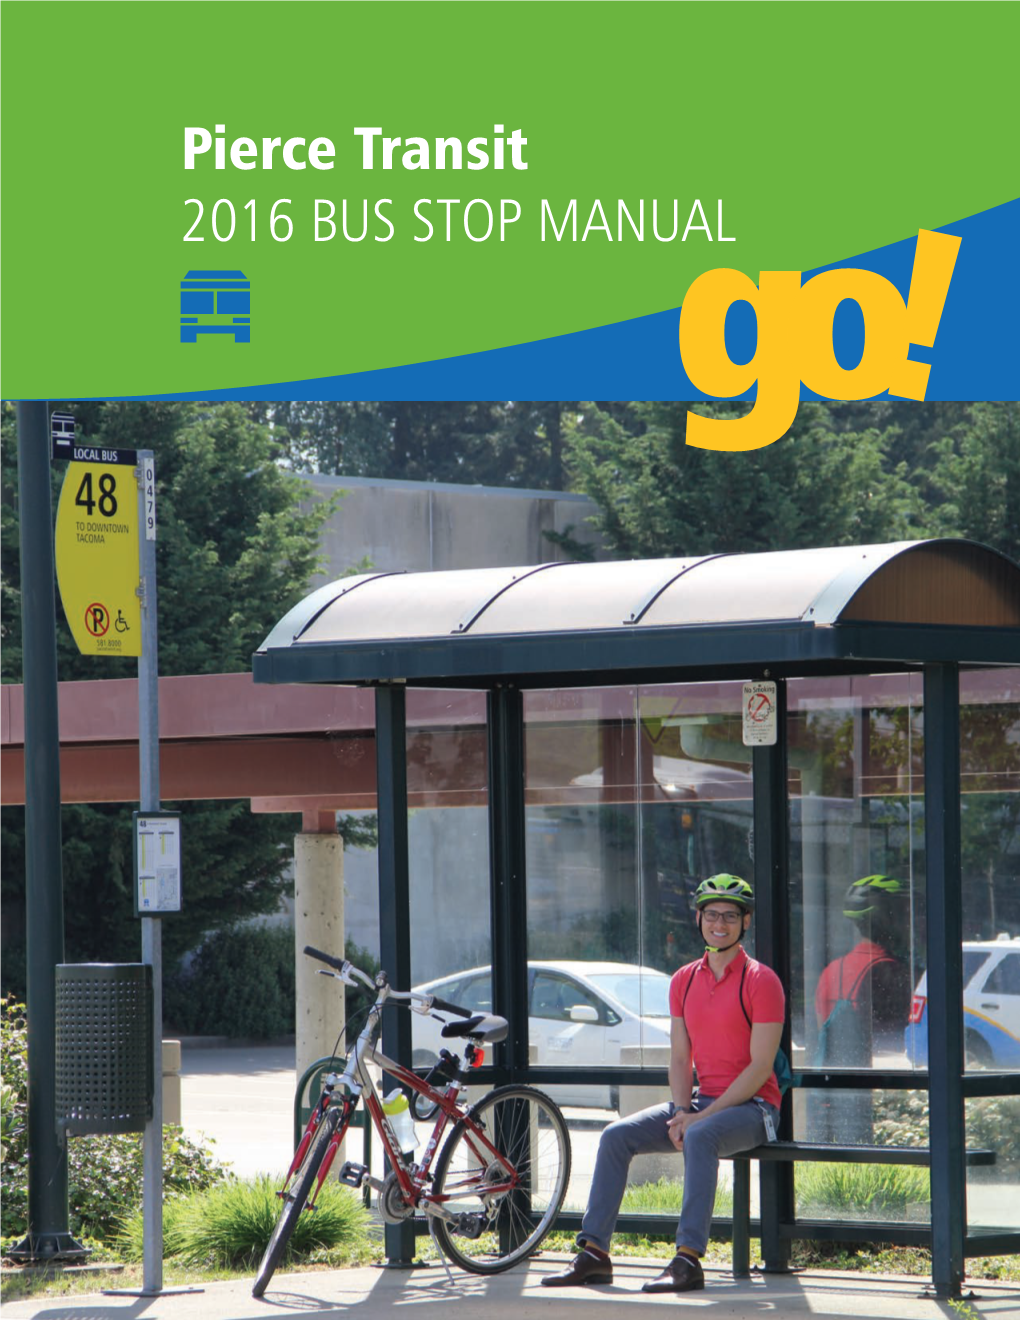 Pierce Transit 2016 BUS STOP Manualgo! Table of Contents